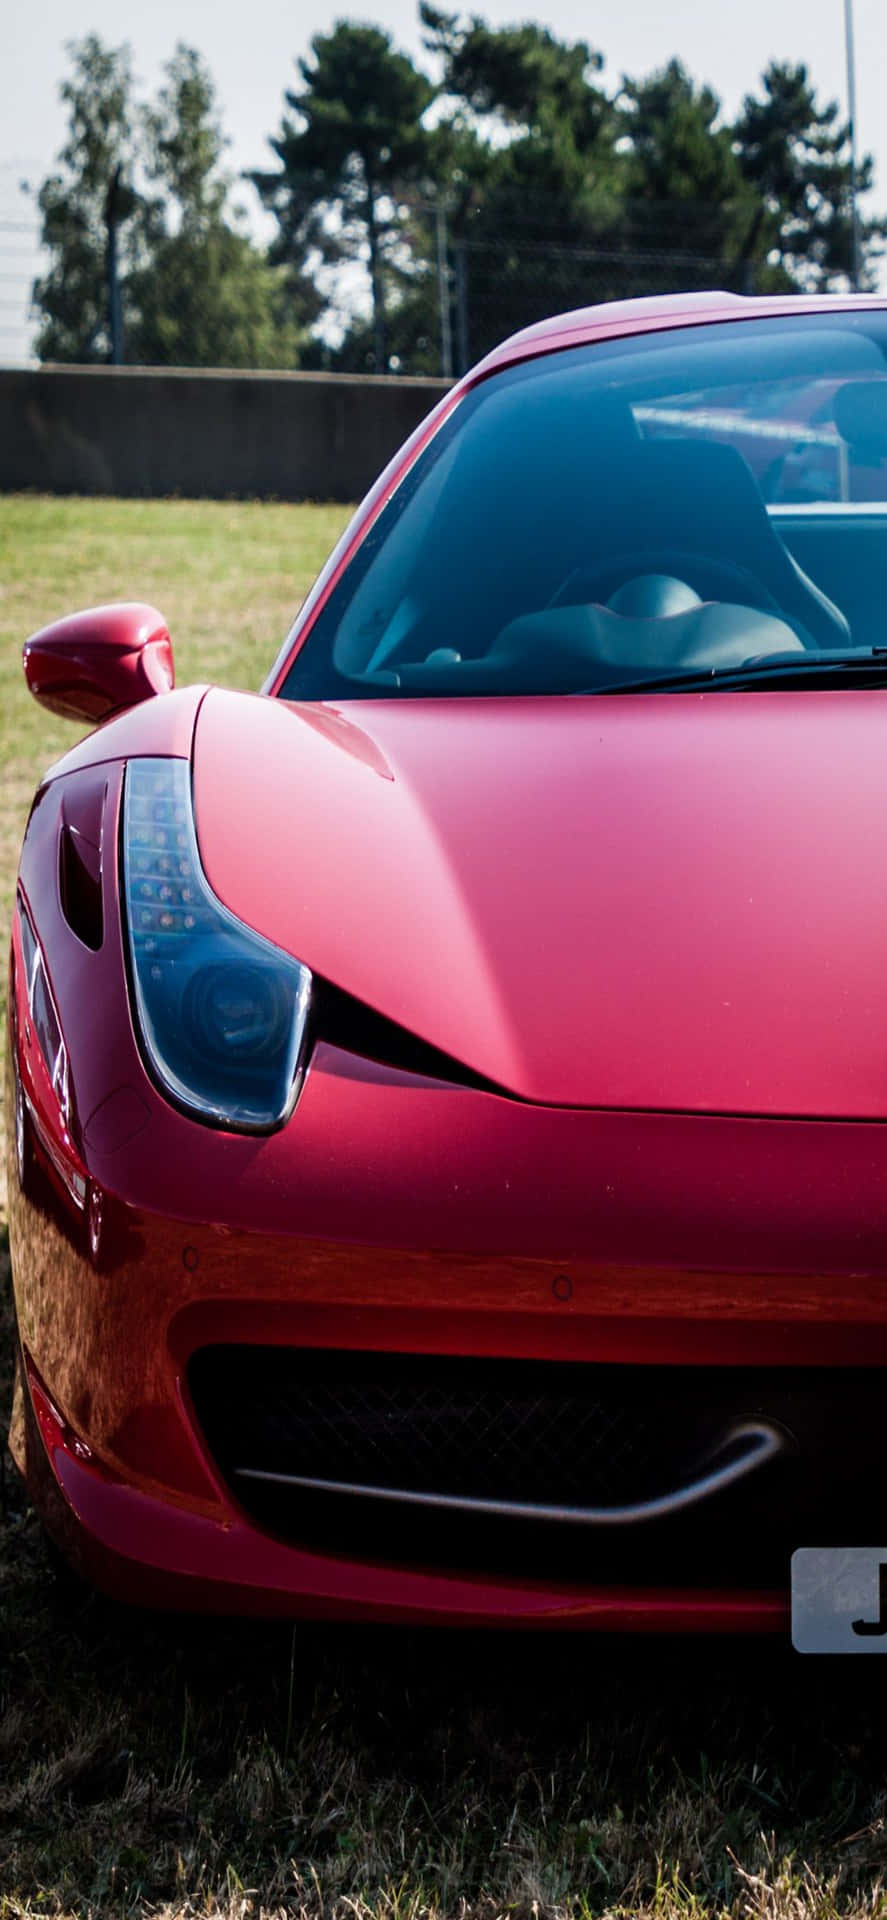 Majestic Ferrari Backdrop on iPhone XS Max